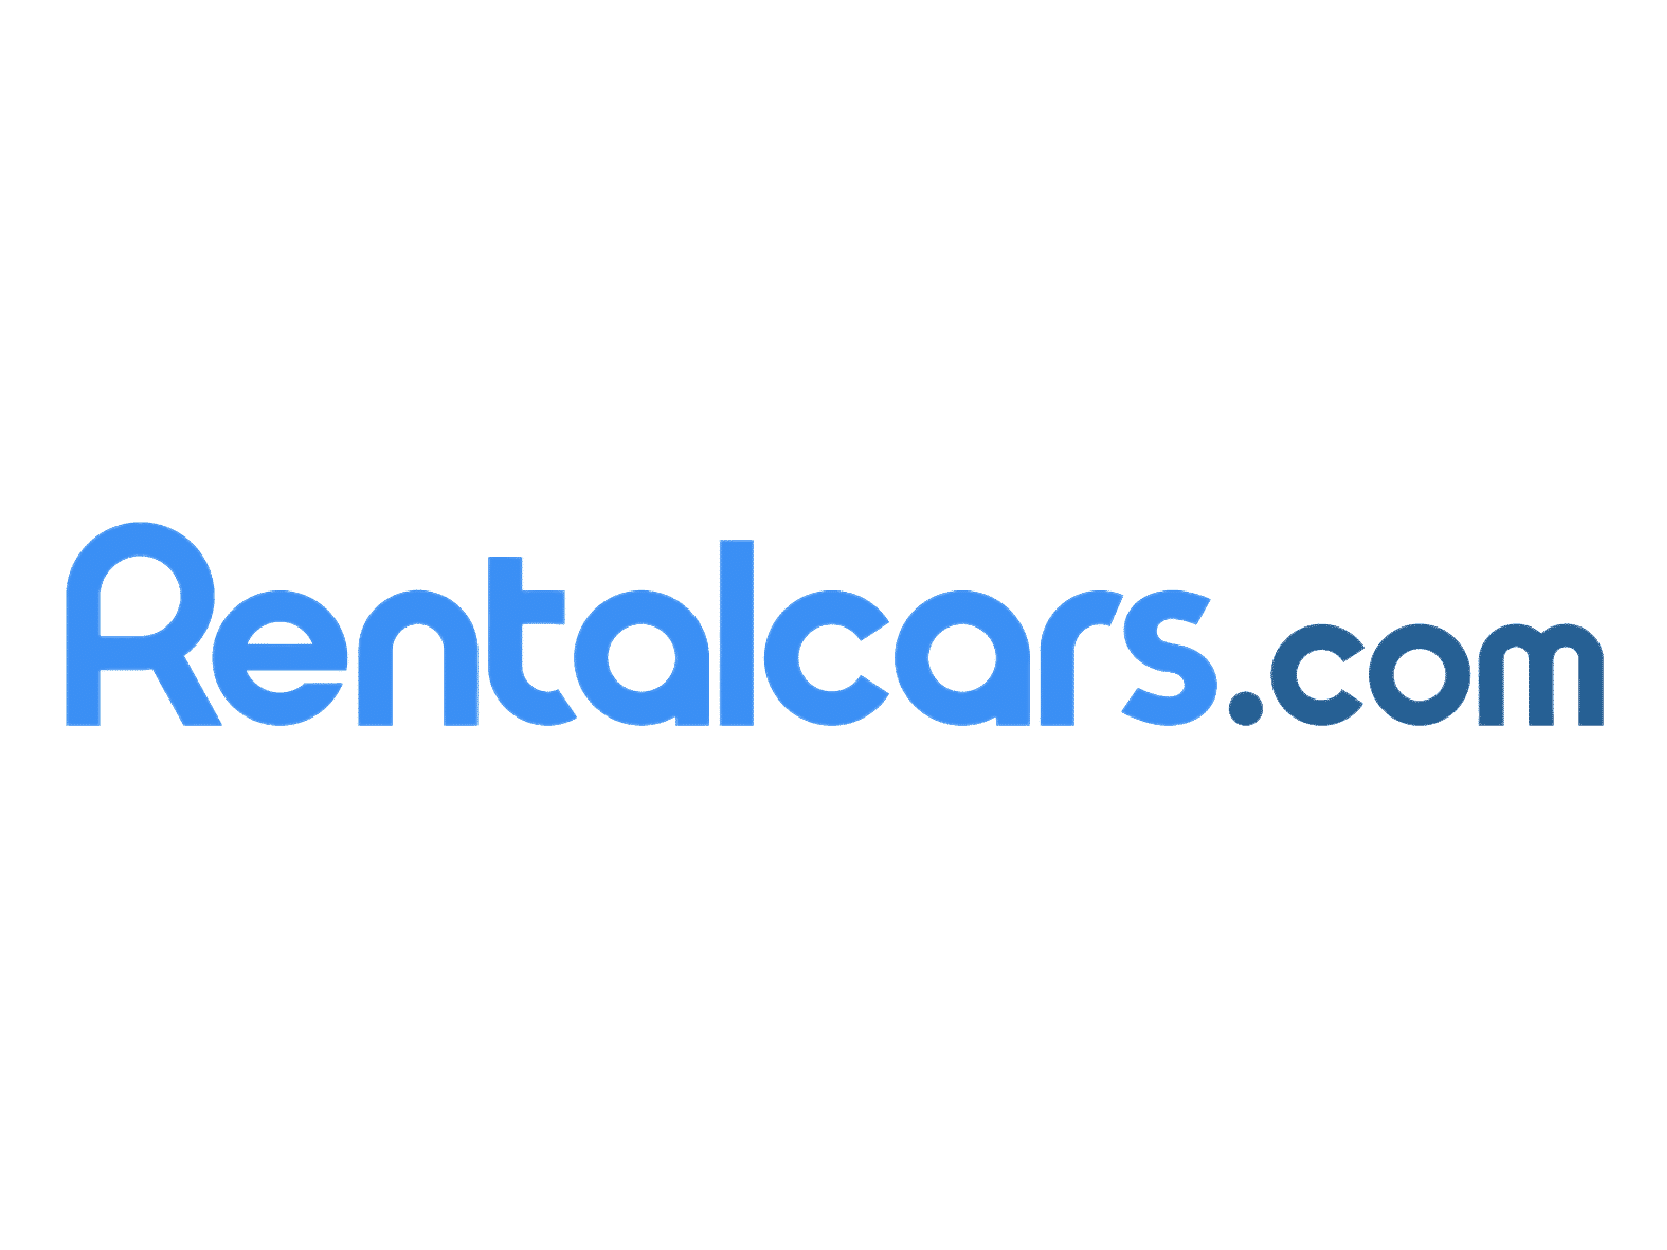 RentalCars